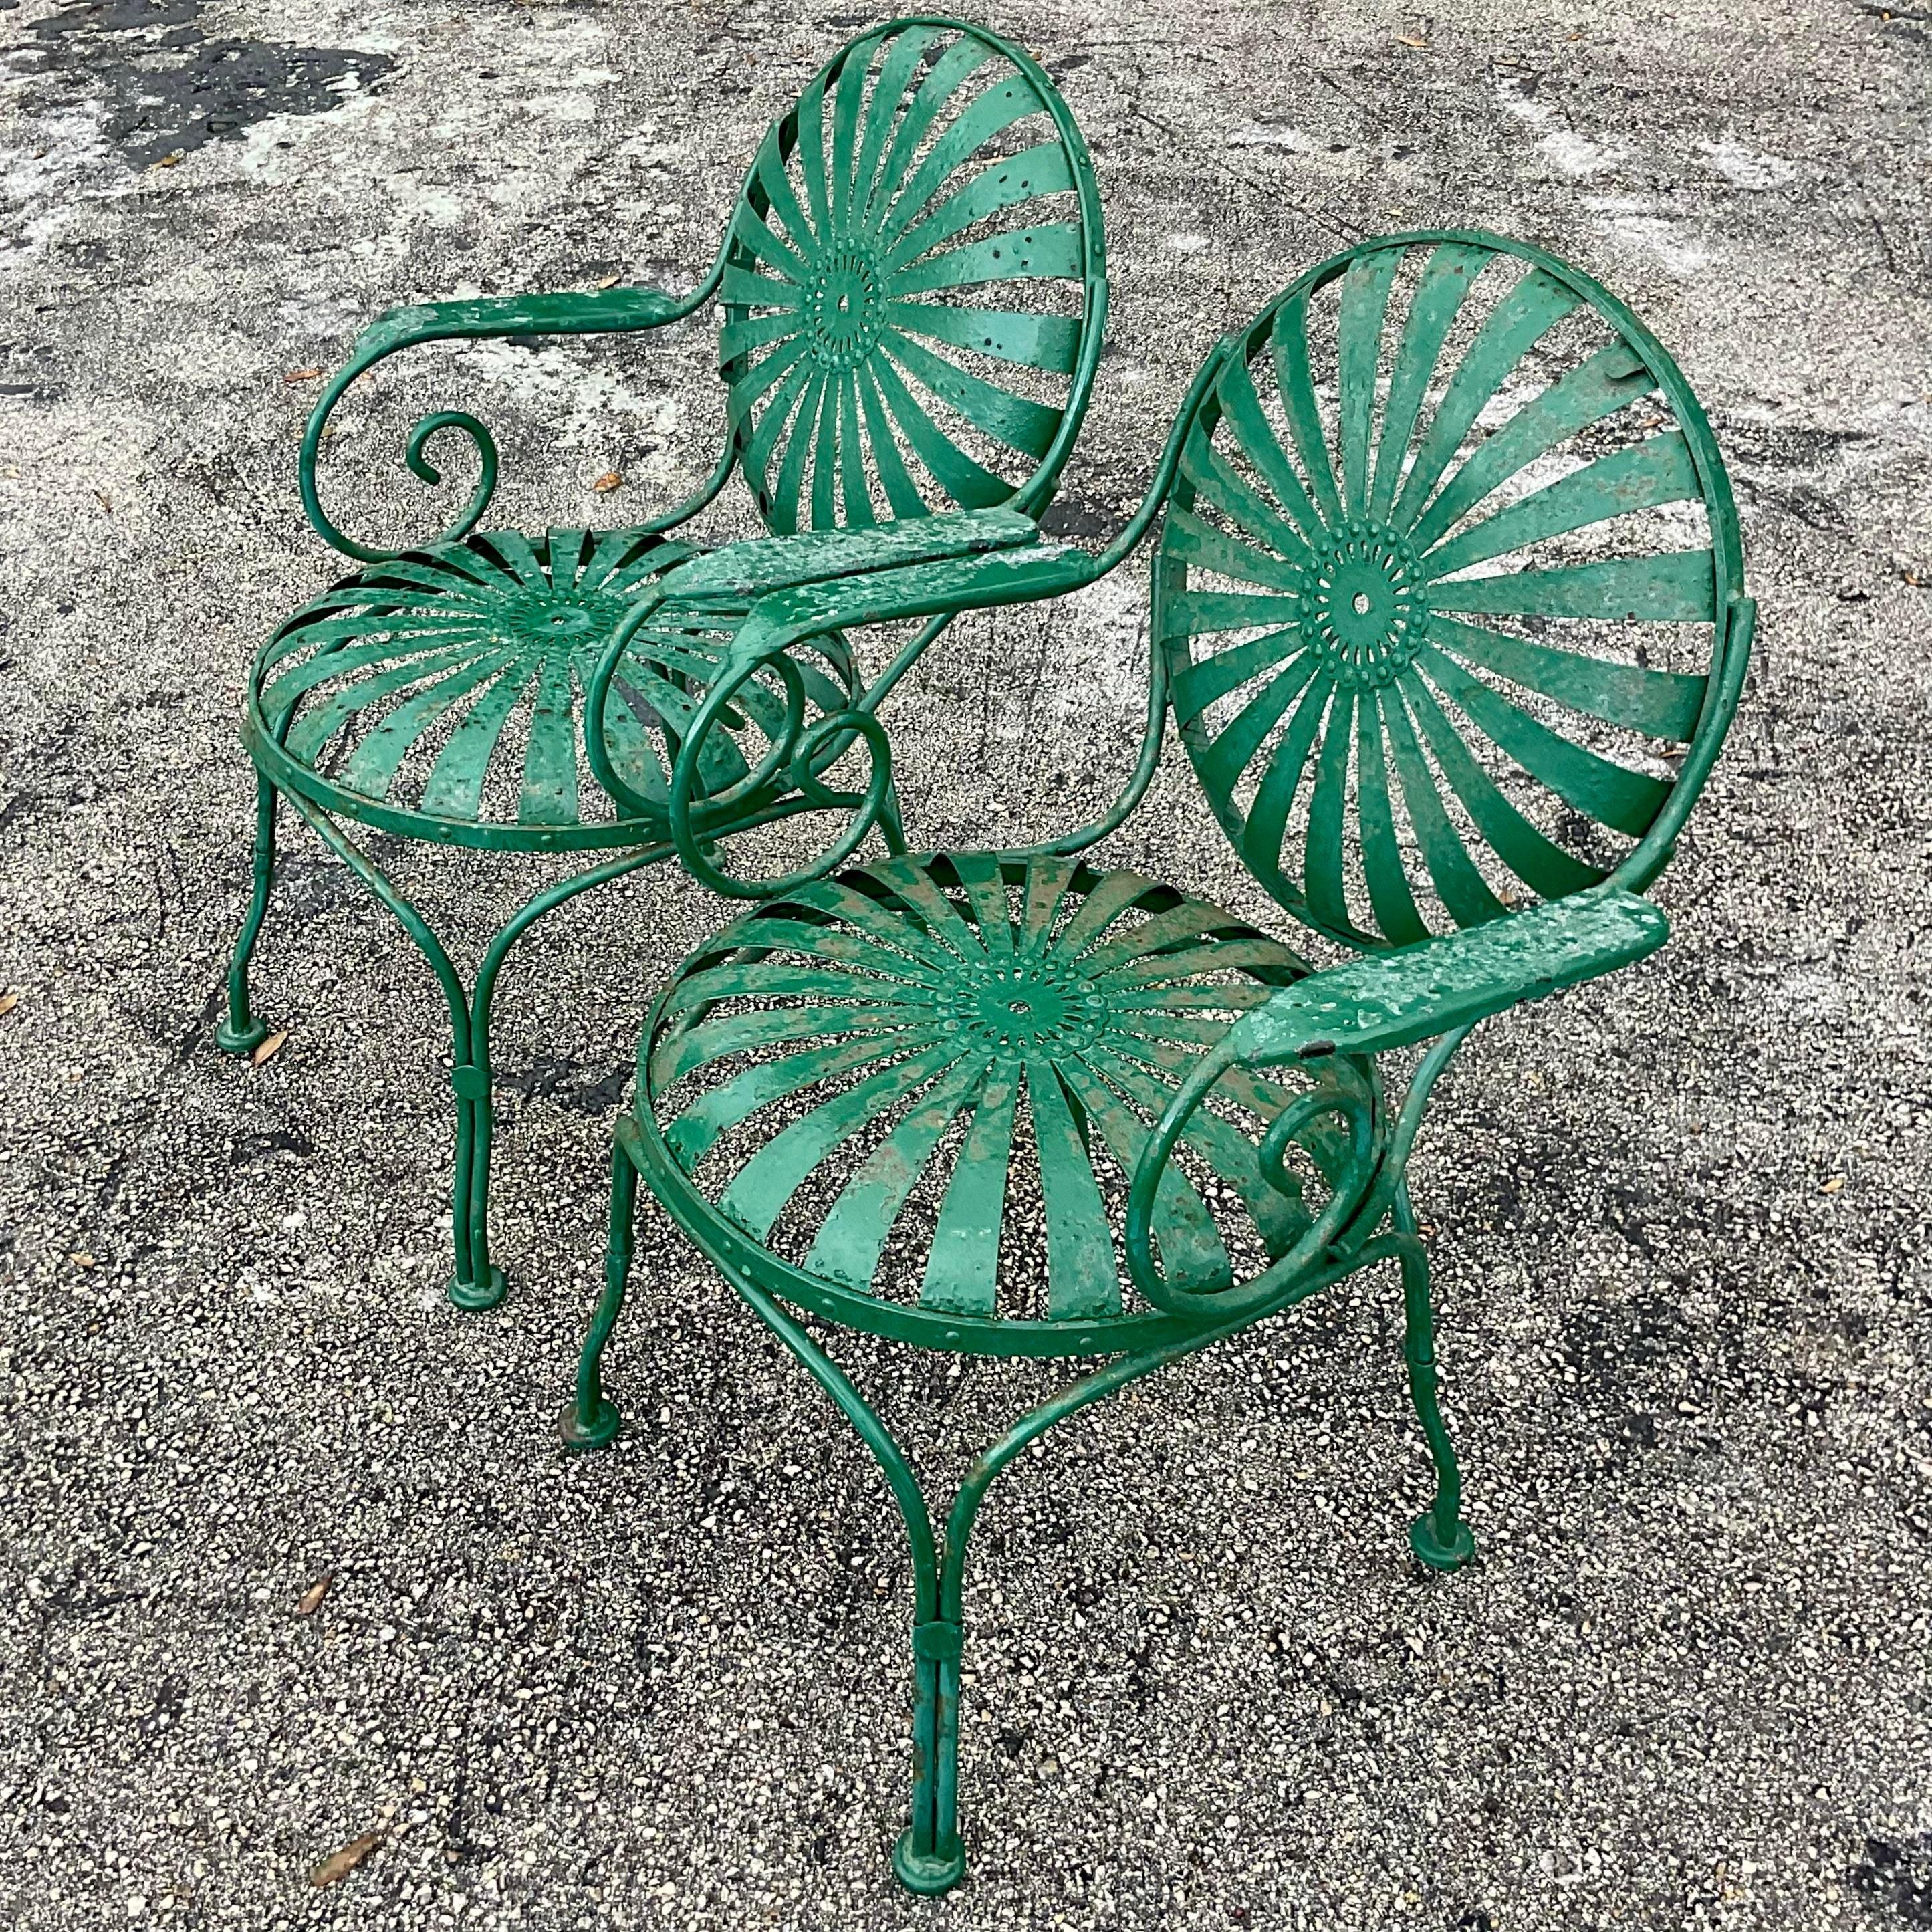 20th Century Vintage Coastal Francois Carre Sunburst Wrought Iron Chairs - a Pair